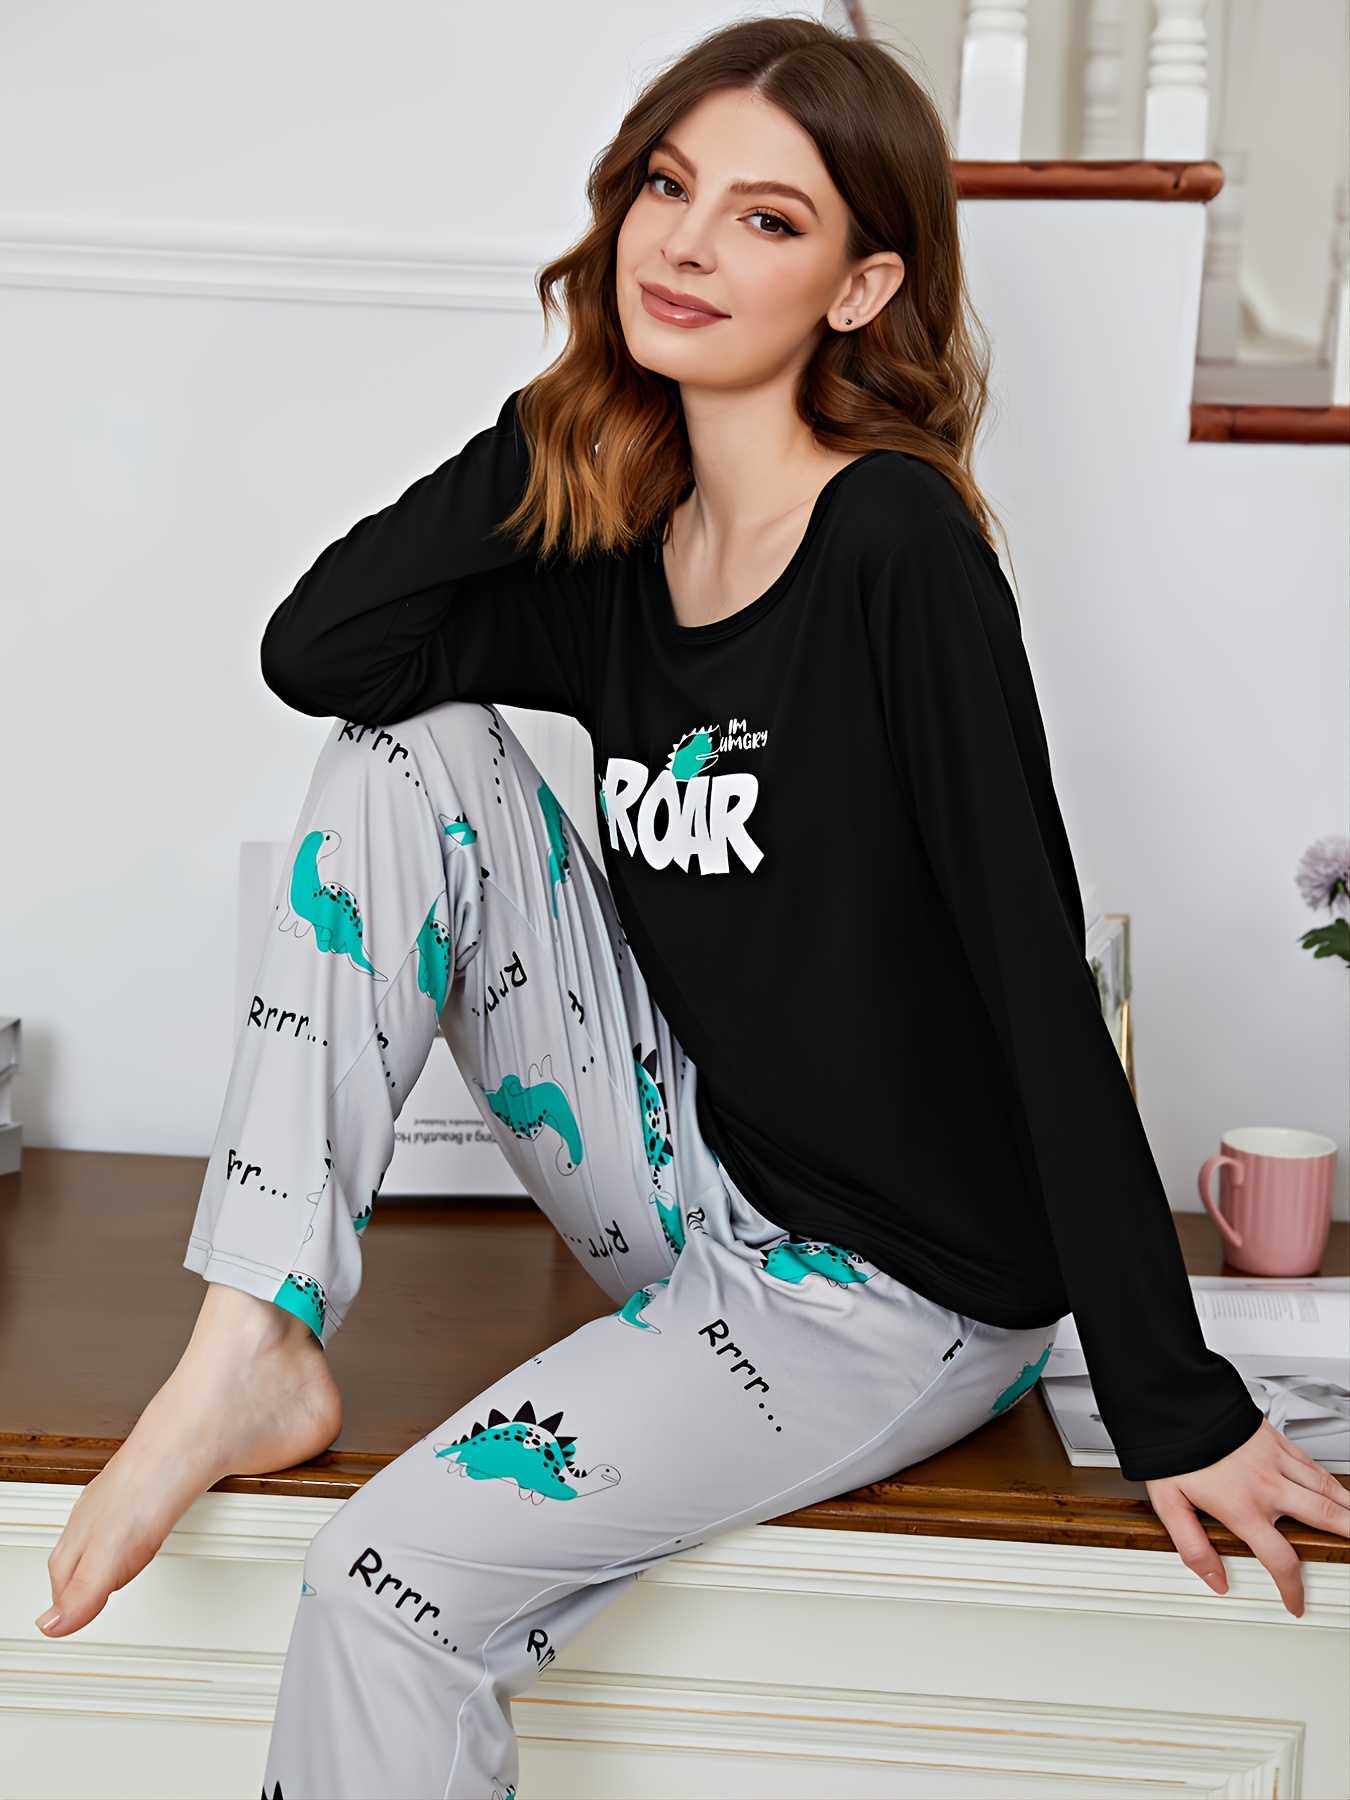  Pajamas For Women, Cute Pajama Pants And Top